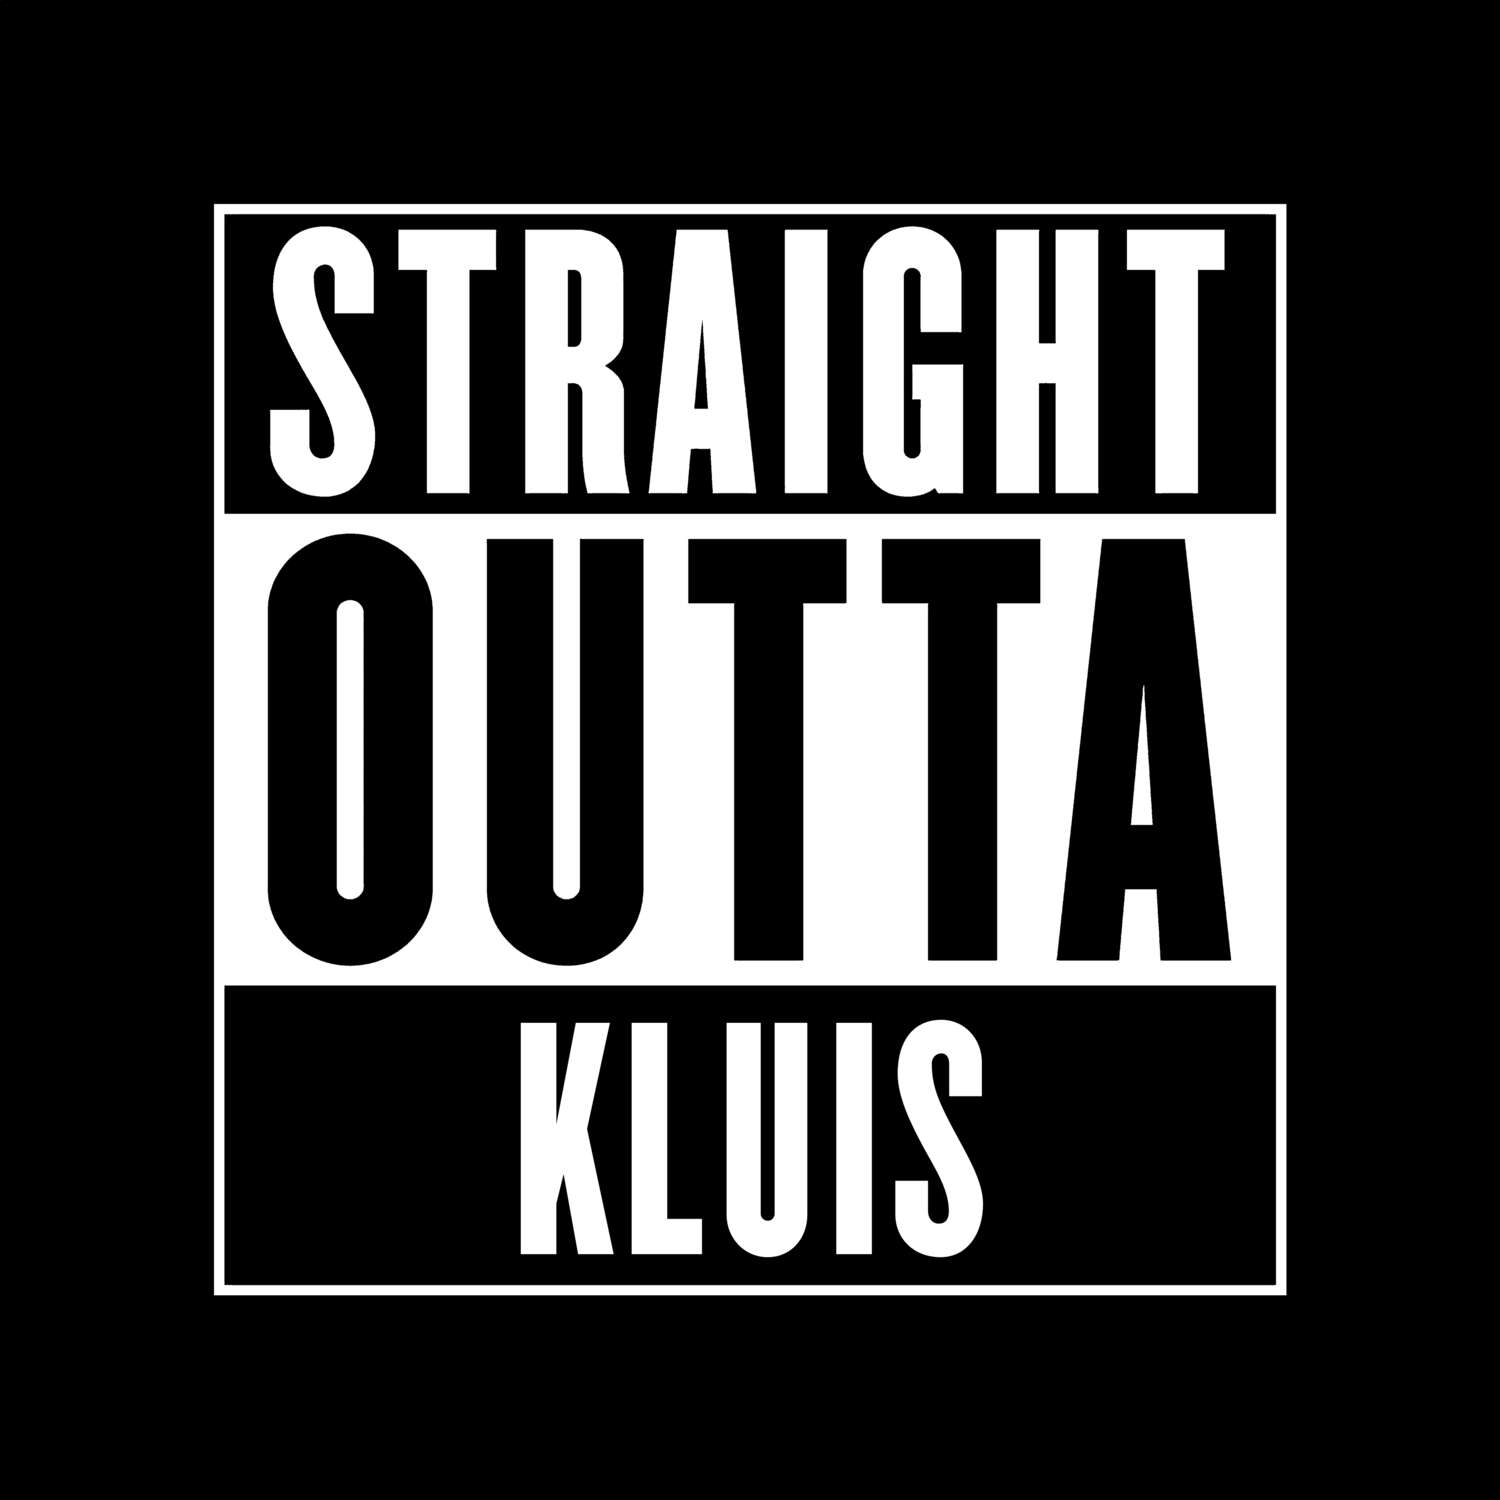 Kluis T-Shirt »Straight Outta«